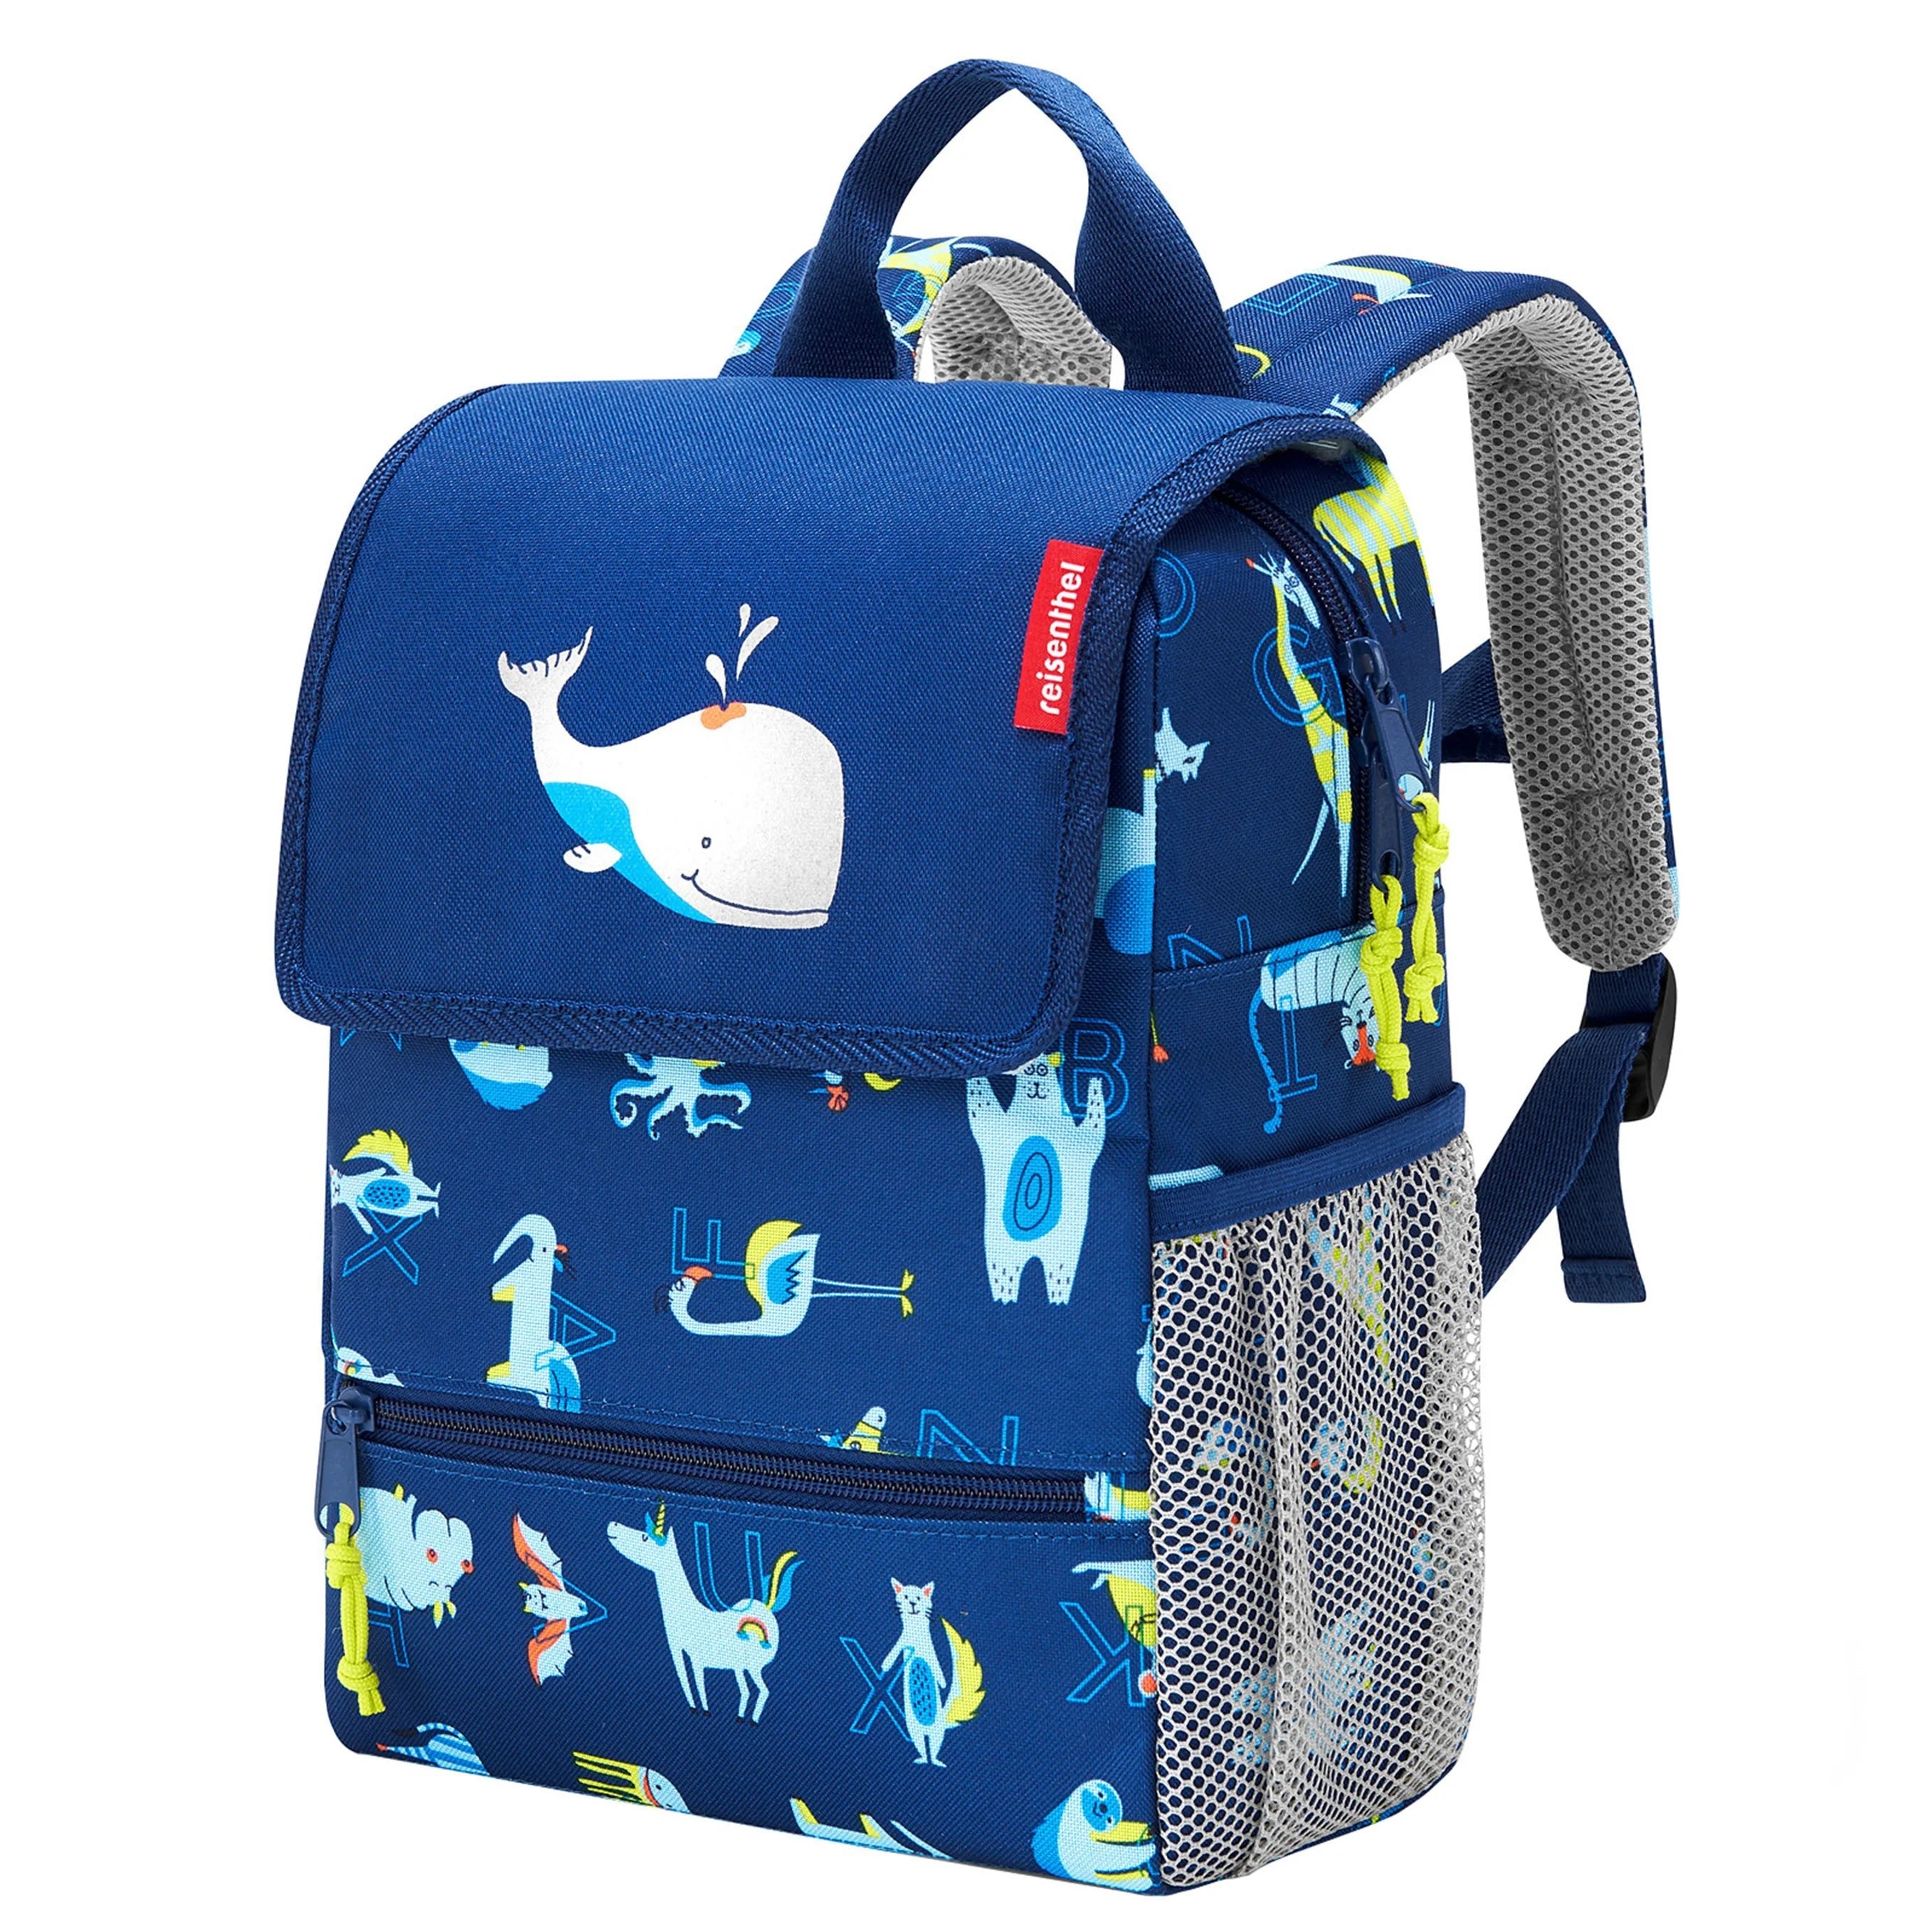 Reisenthel Kids Backpack Rucksack 28 cm - friends blue